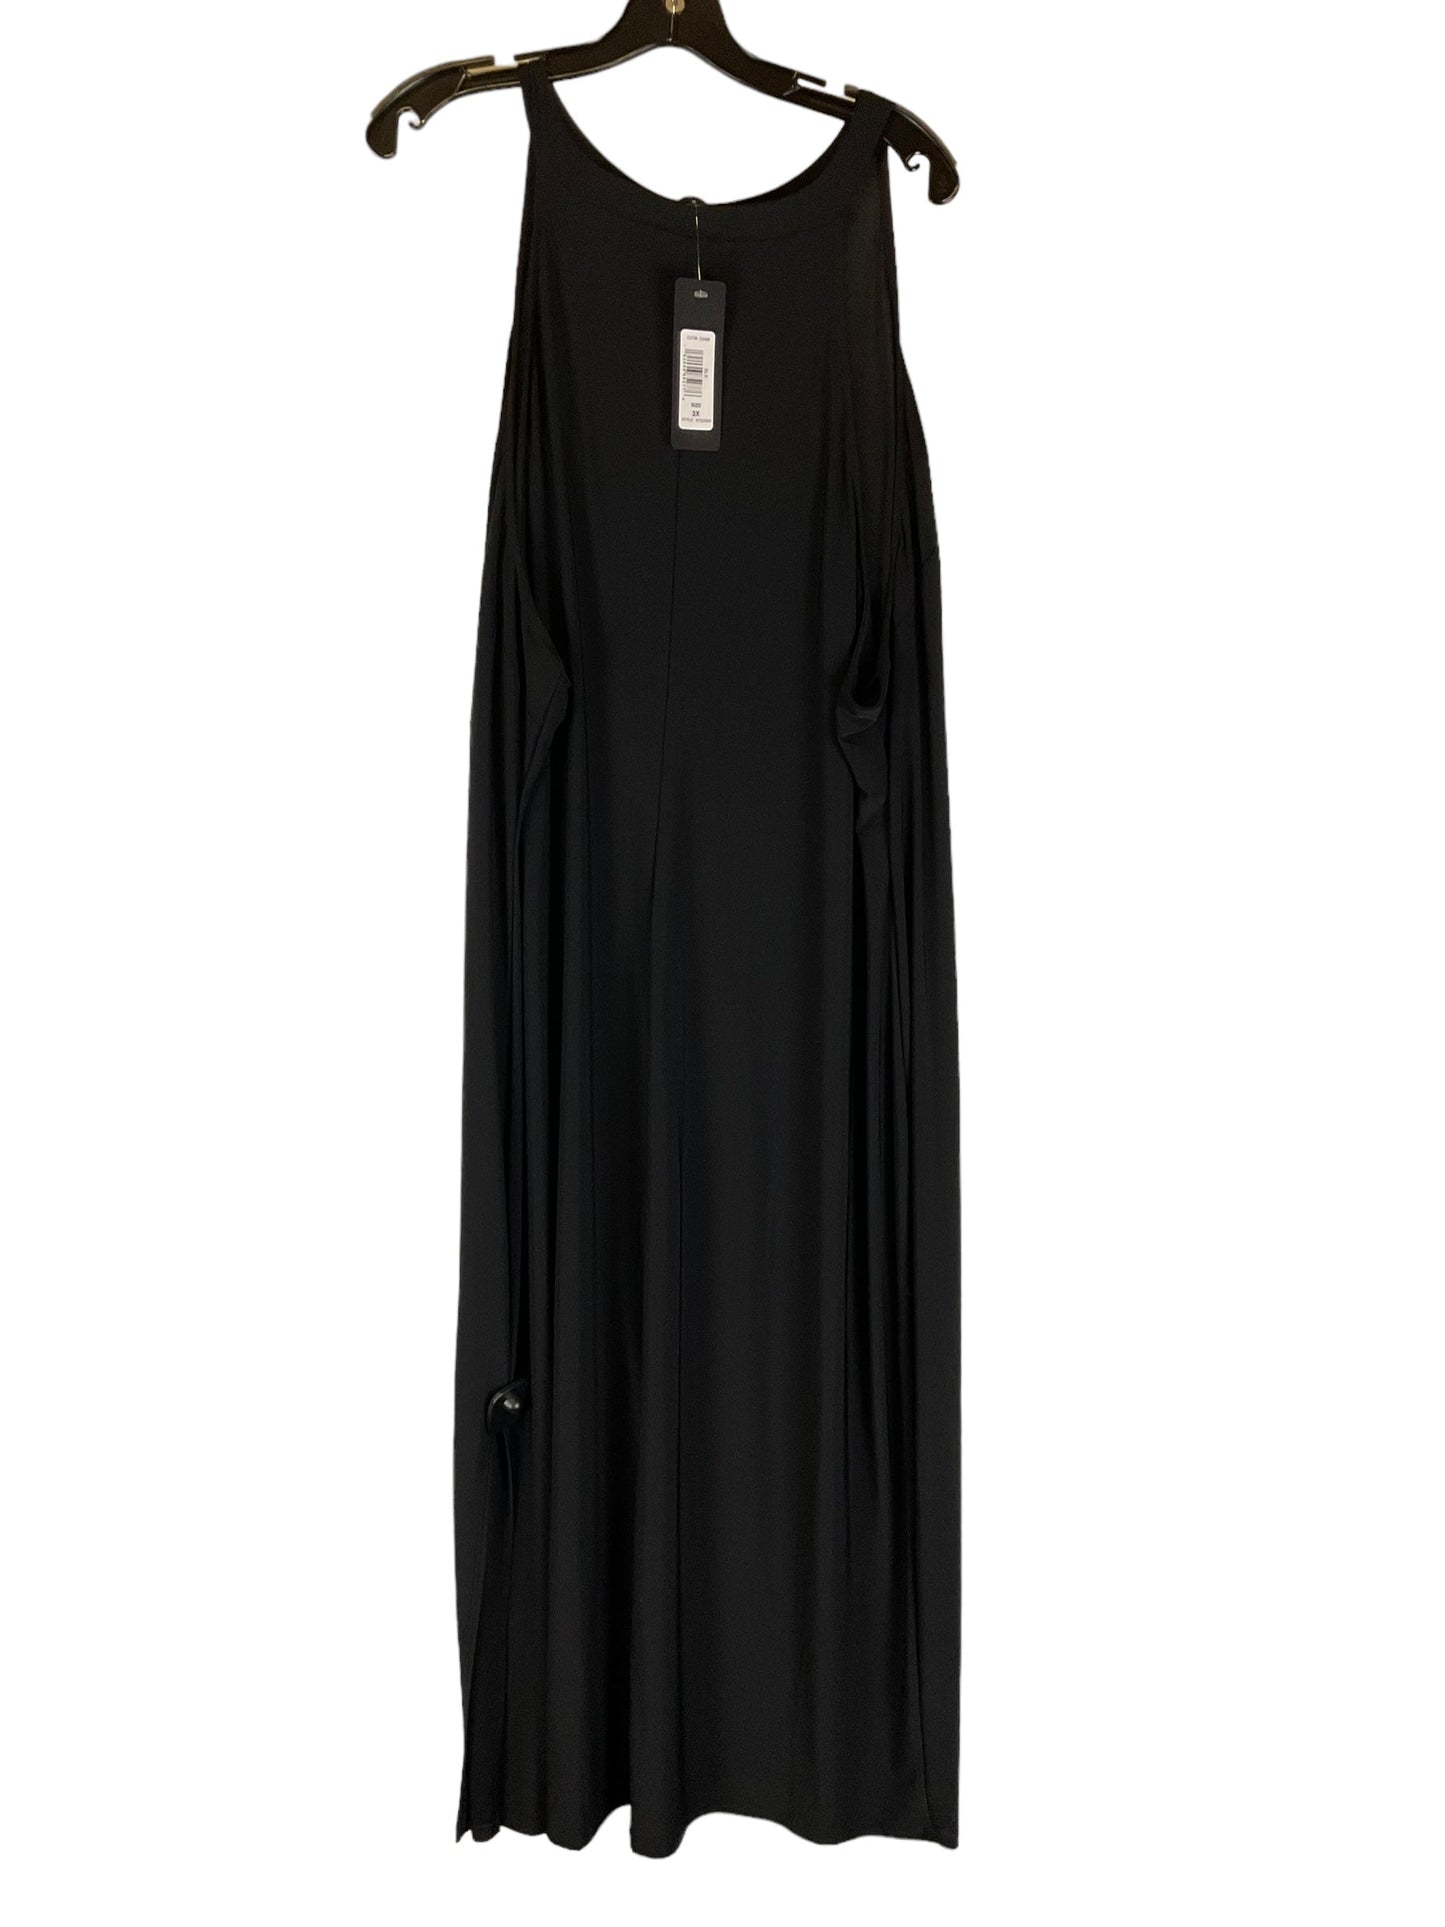 Black Dress Casual Maxi Bebe, Size 3x